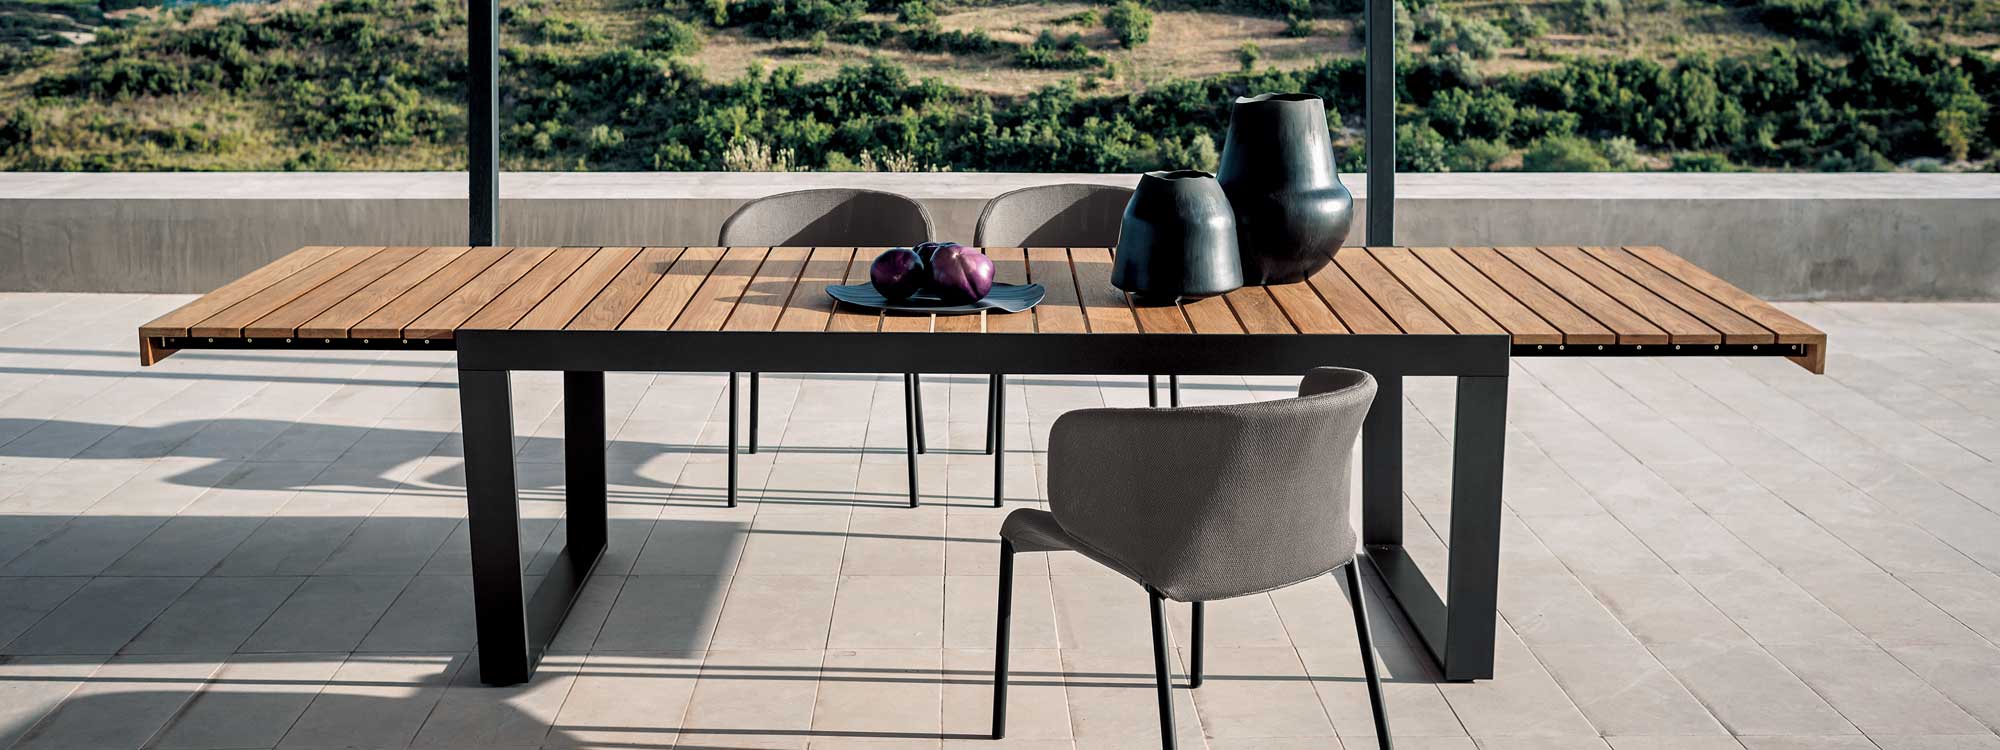 Spinnaker extendable garden table & extending outdoor dining table extends to a 12 seat garden table by Roda modern garden furnitur